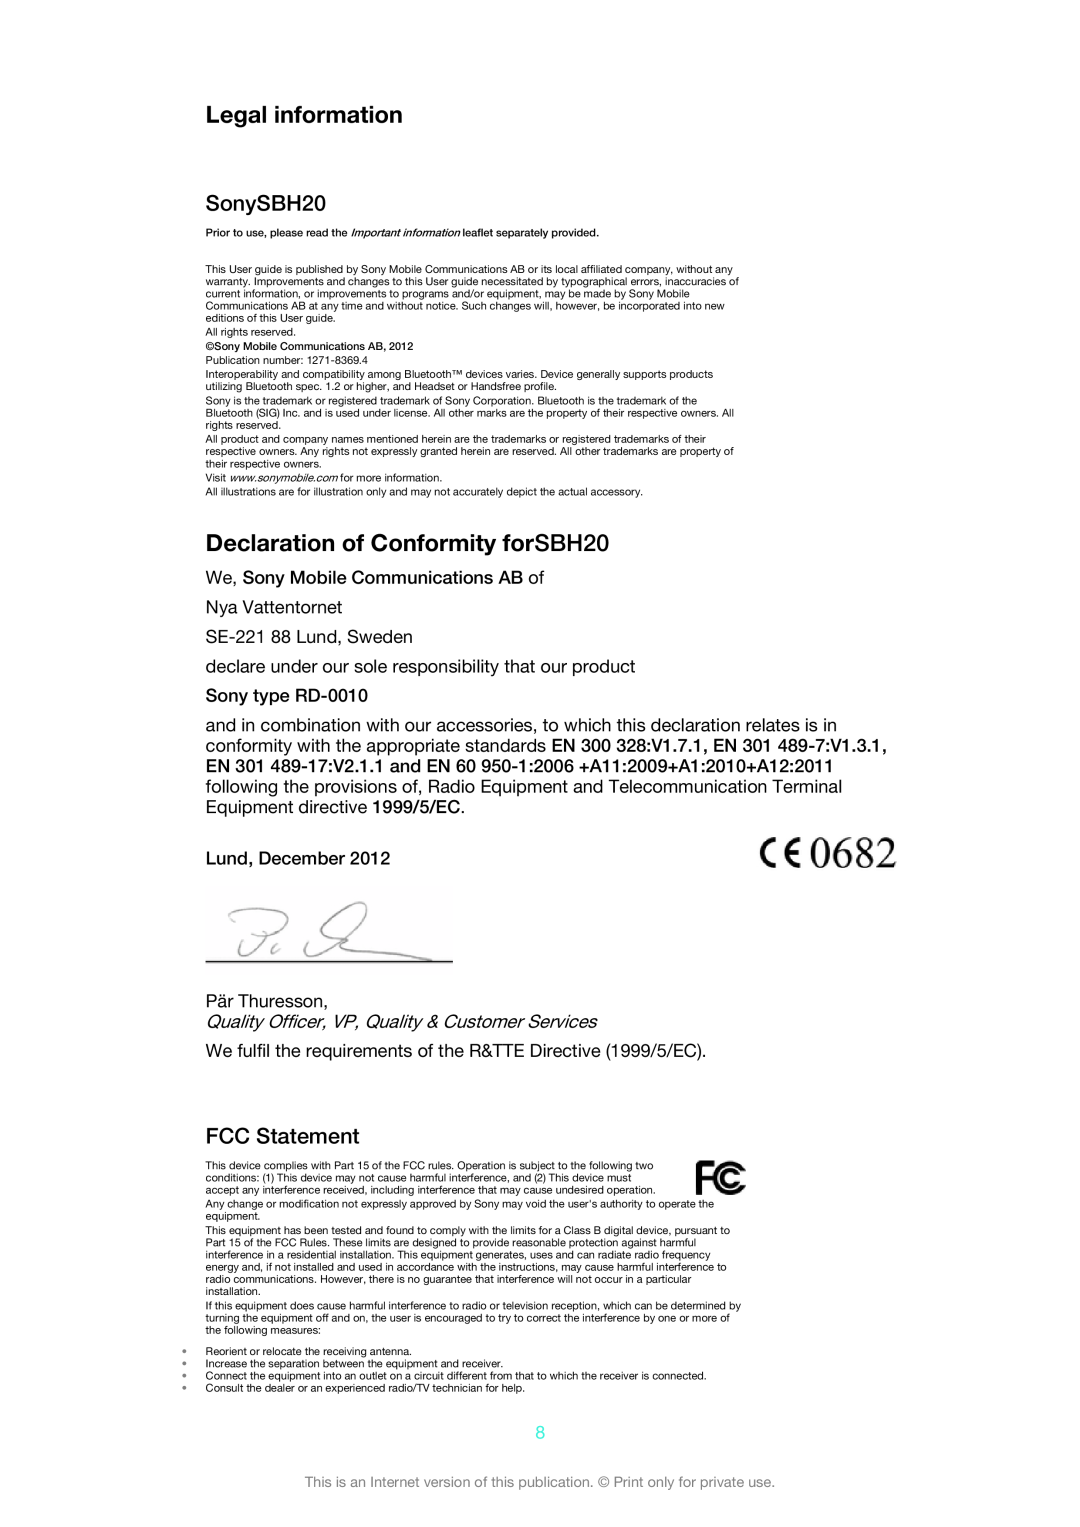 Sony manual Legal information, Declaration of Conformity forSBH20, SonySBH20, FCC Statement 